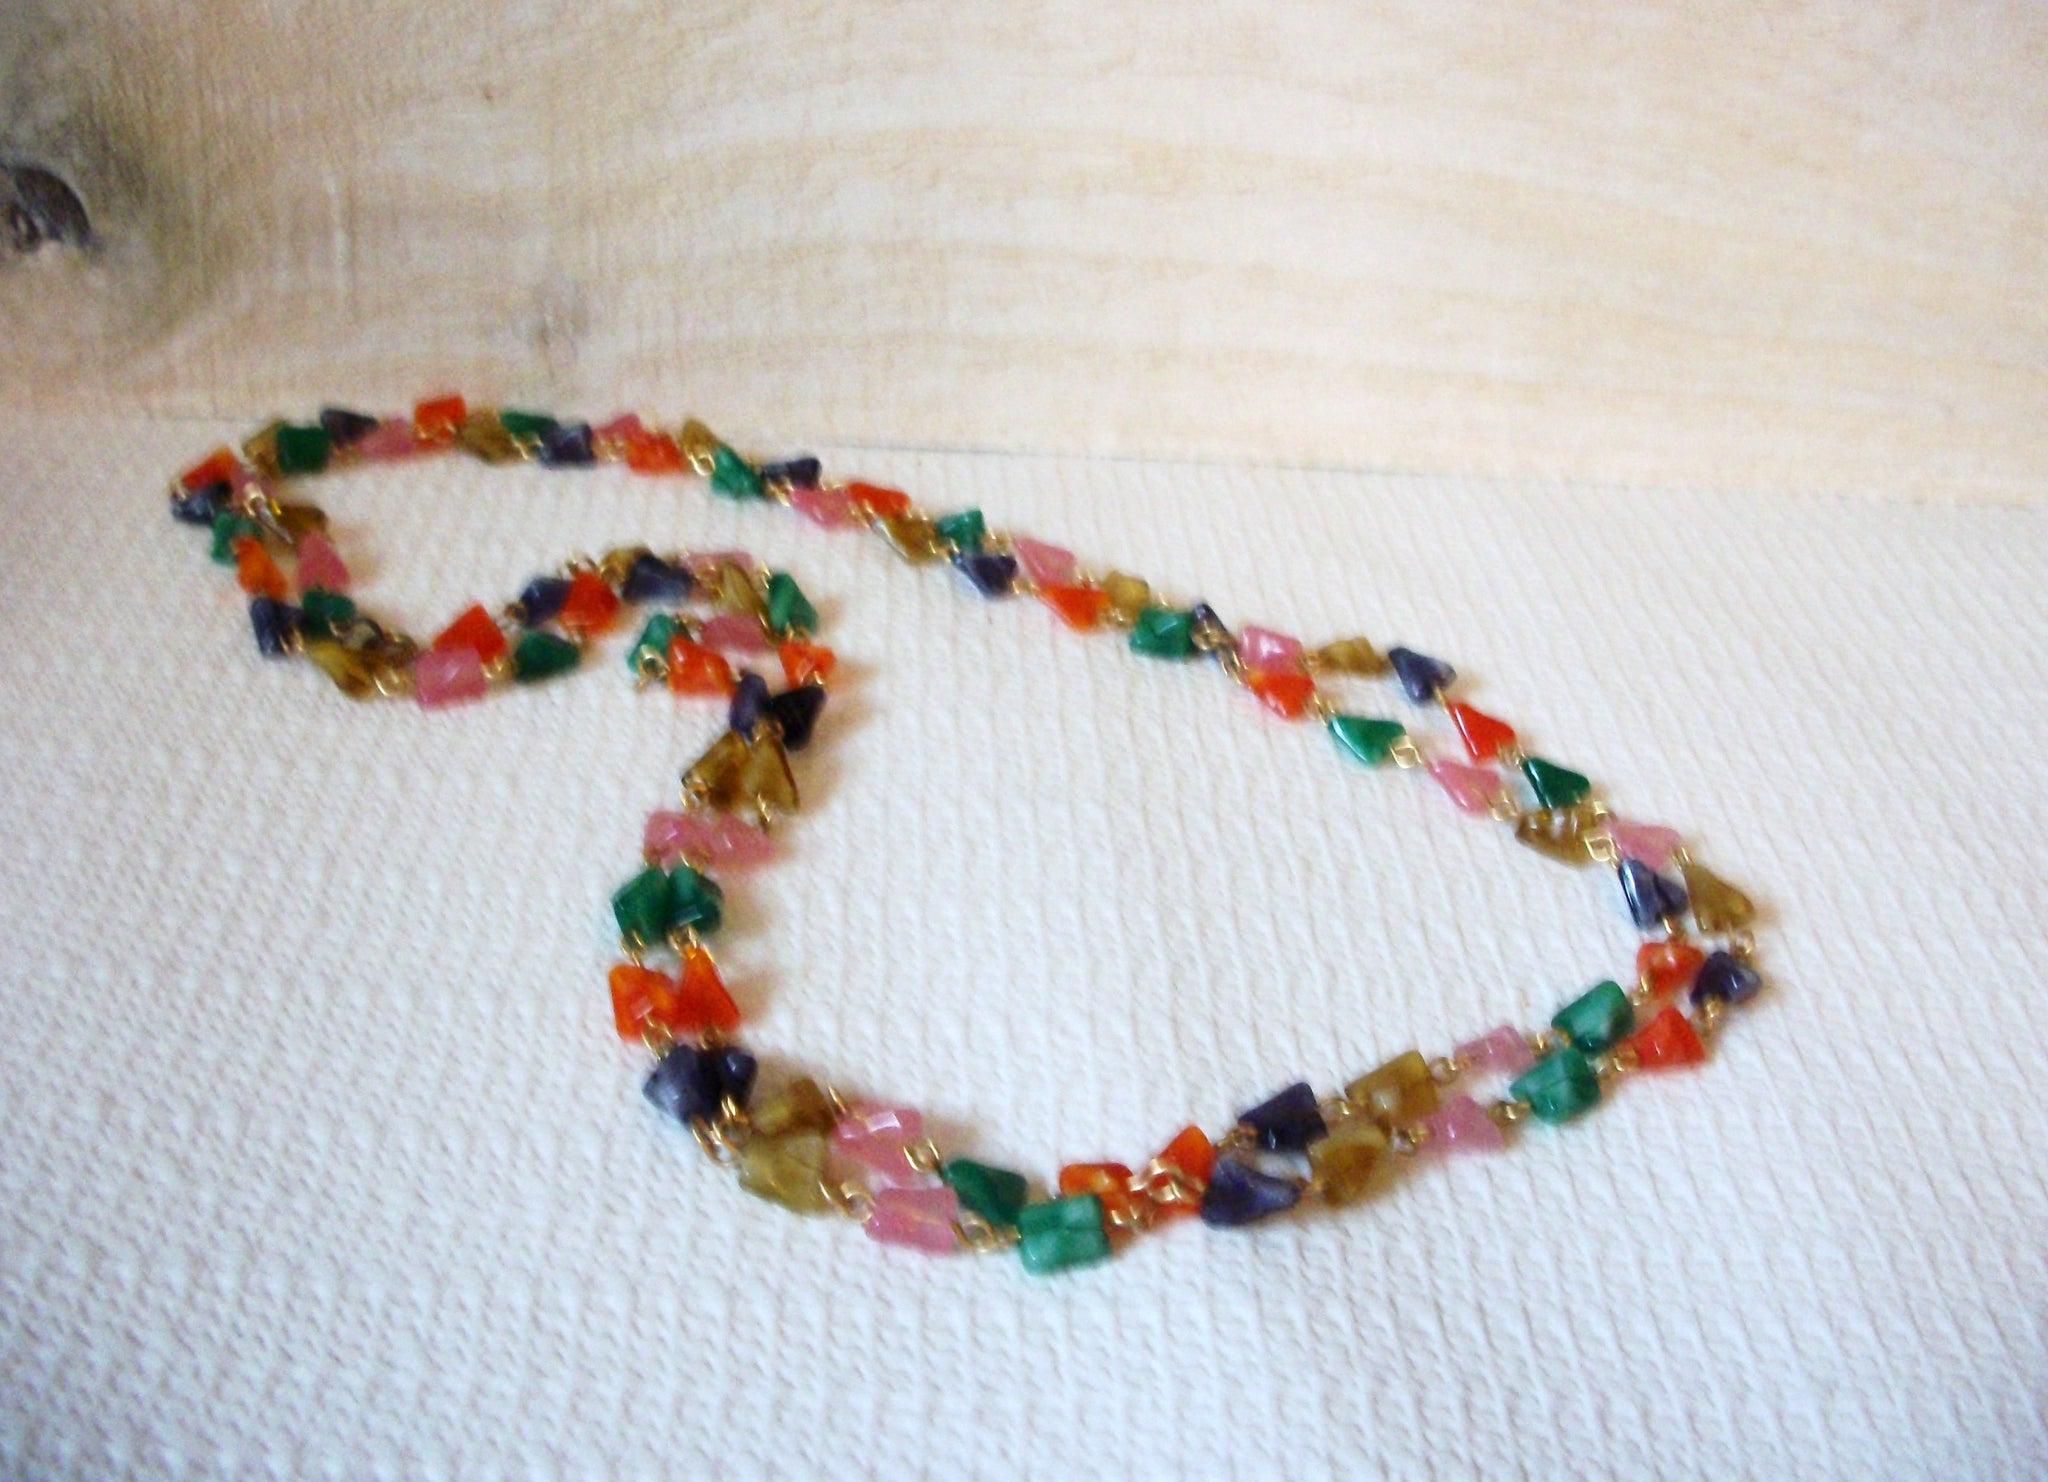 Retro Colorful Glass Necklace 50520